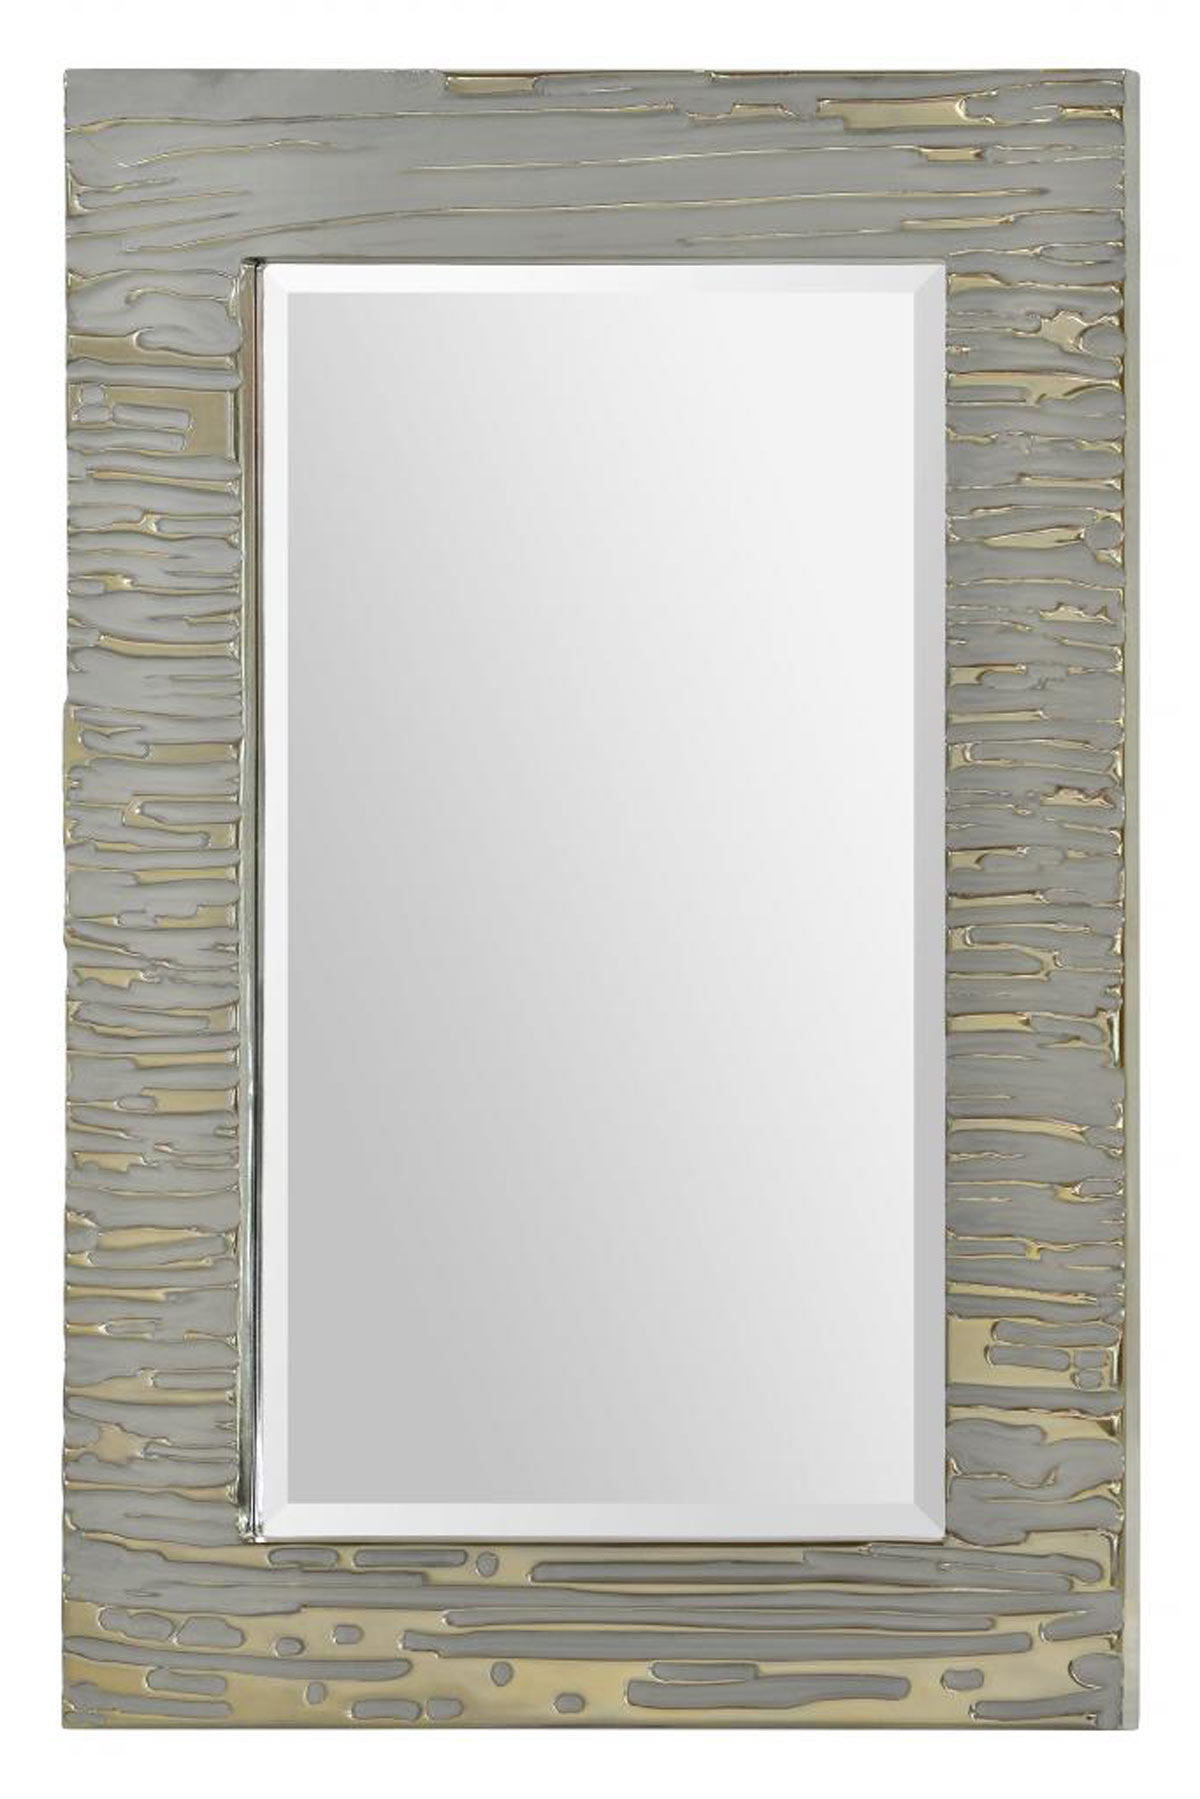 Ren-Wil Foxtrot mirror - Silver paint